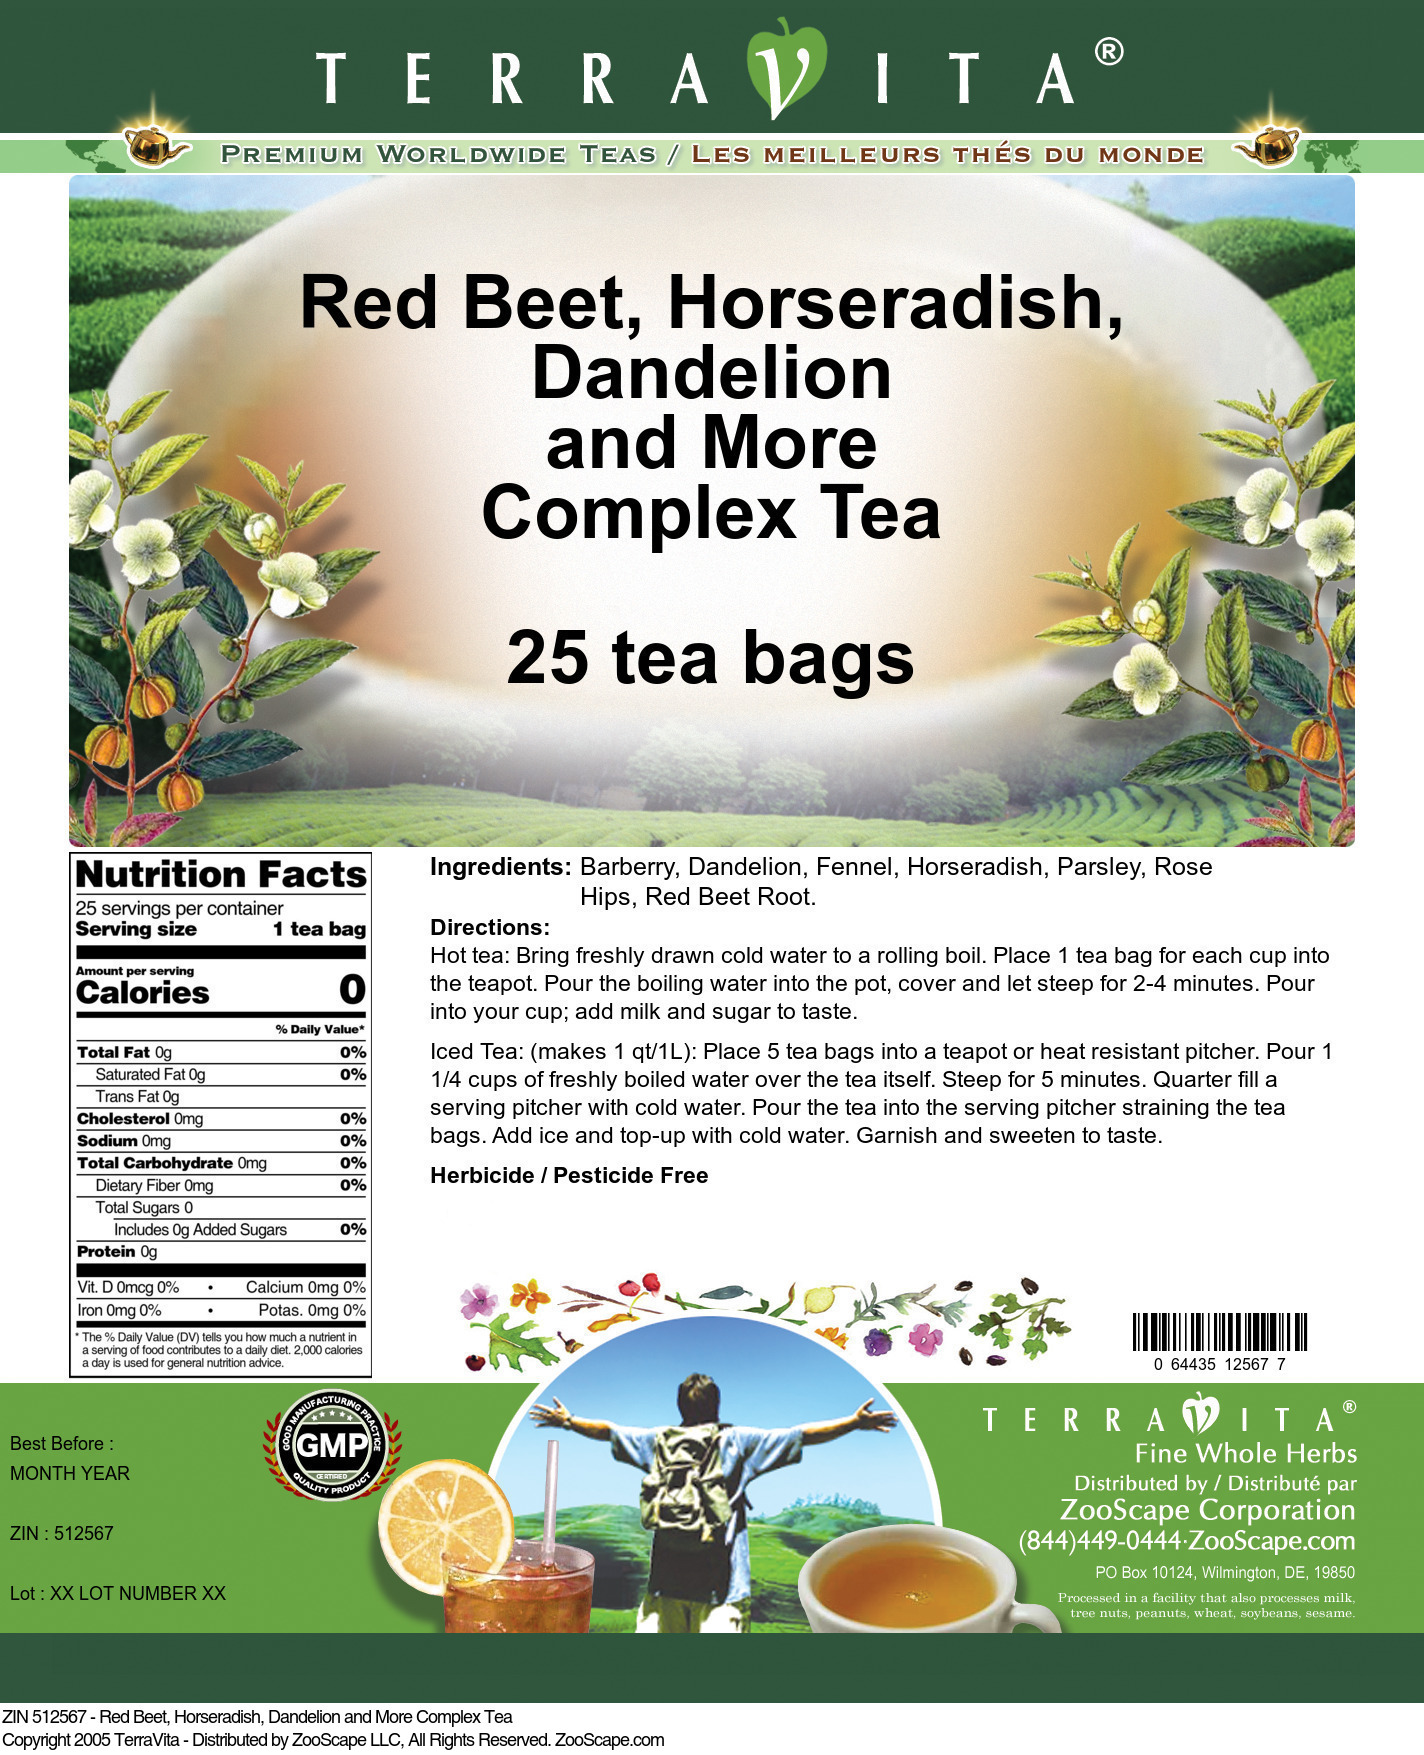 Red Beet, Horseradish, Dandelion and More Complex Tea - Label